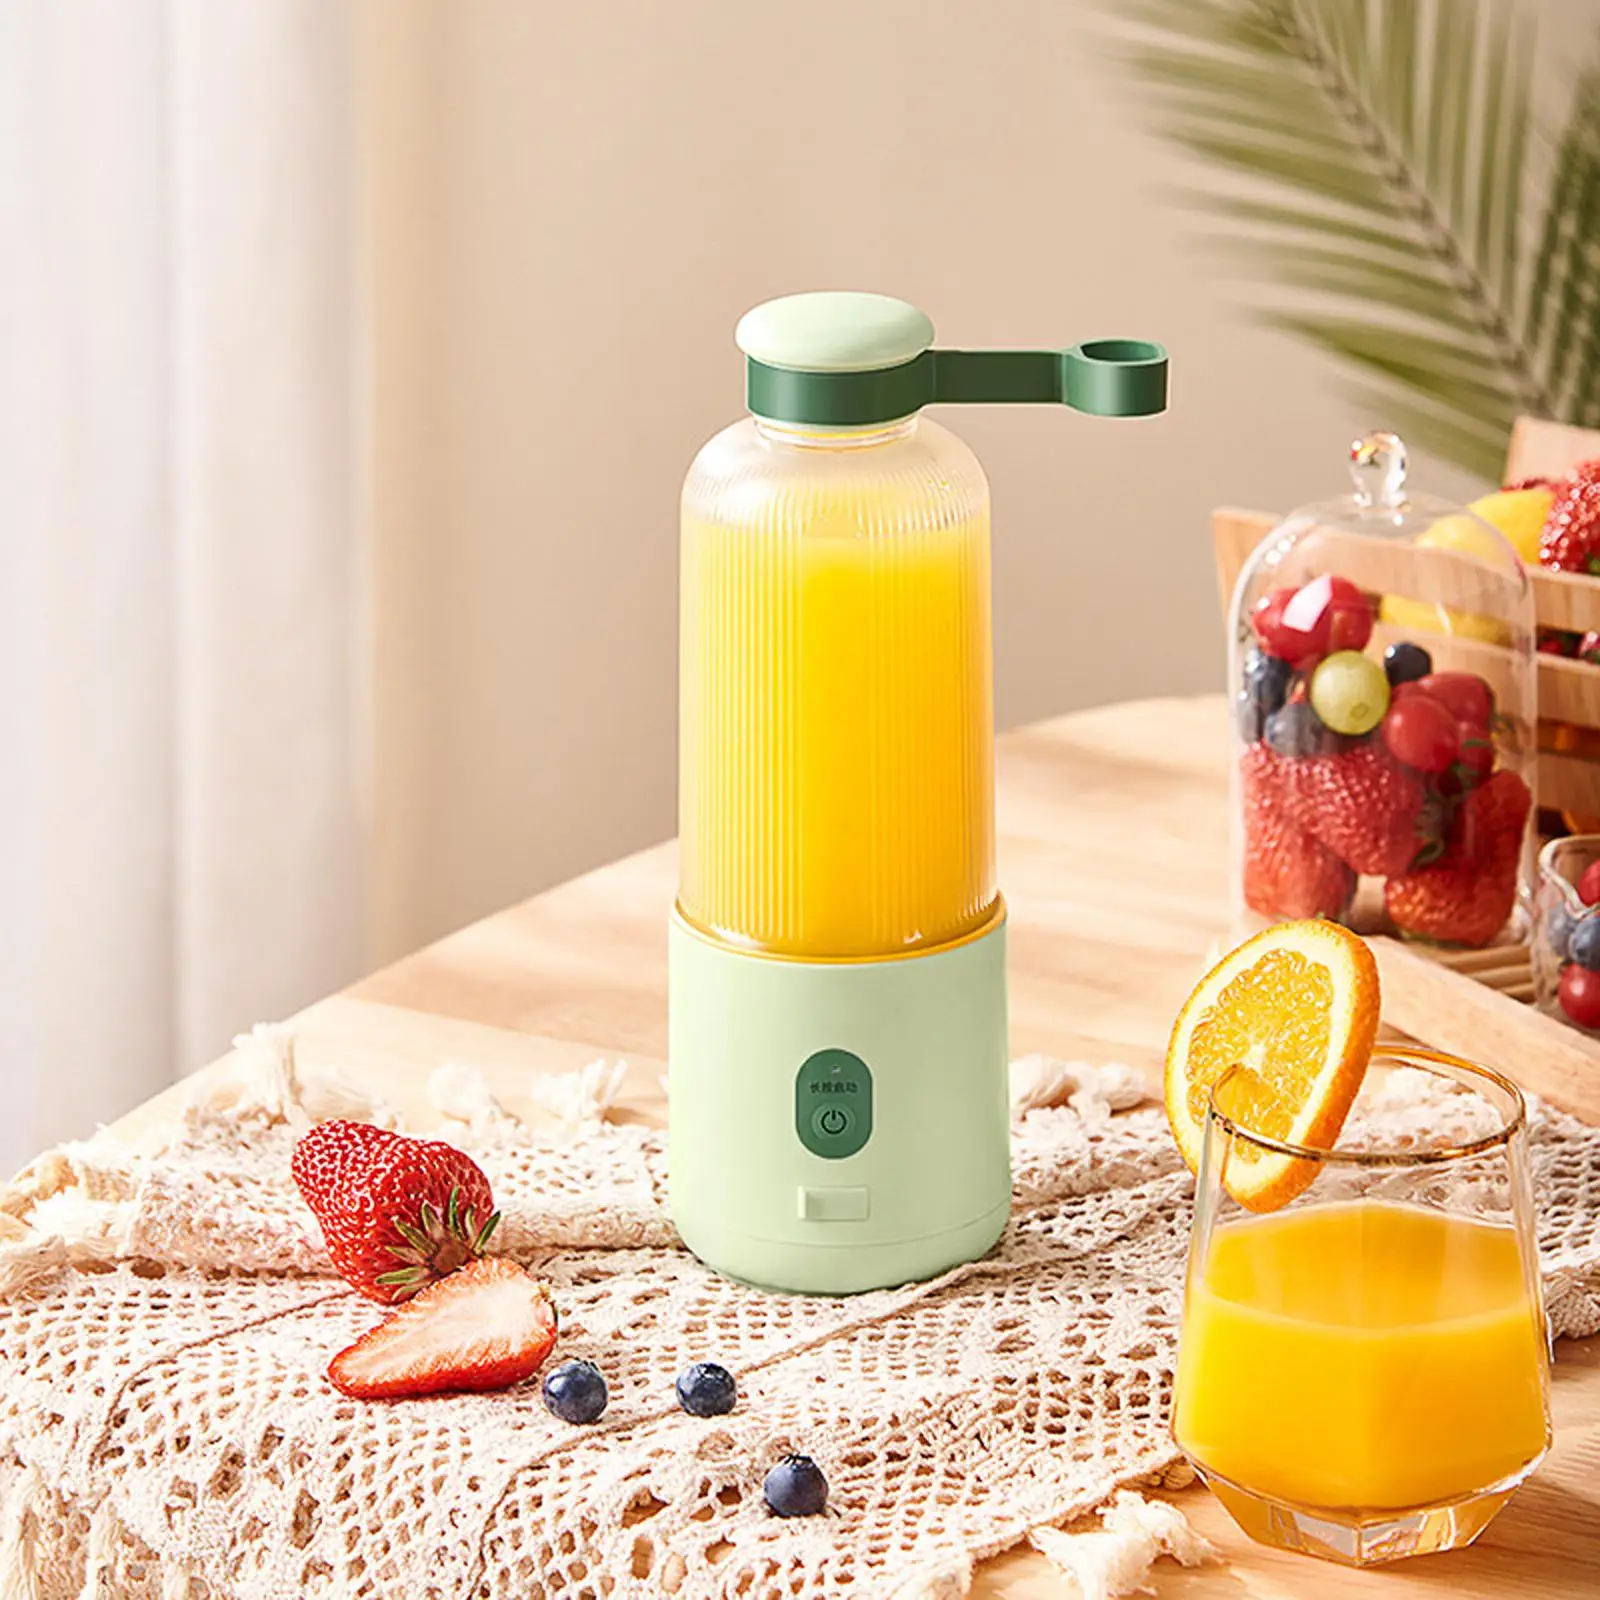 Multifunctional Electric Juicer Fruit Juicing Cup Fruits Juice Mixer for Making Juice Smoothies